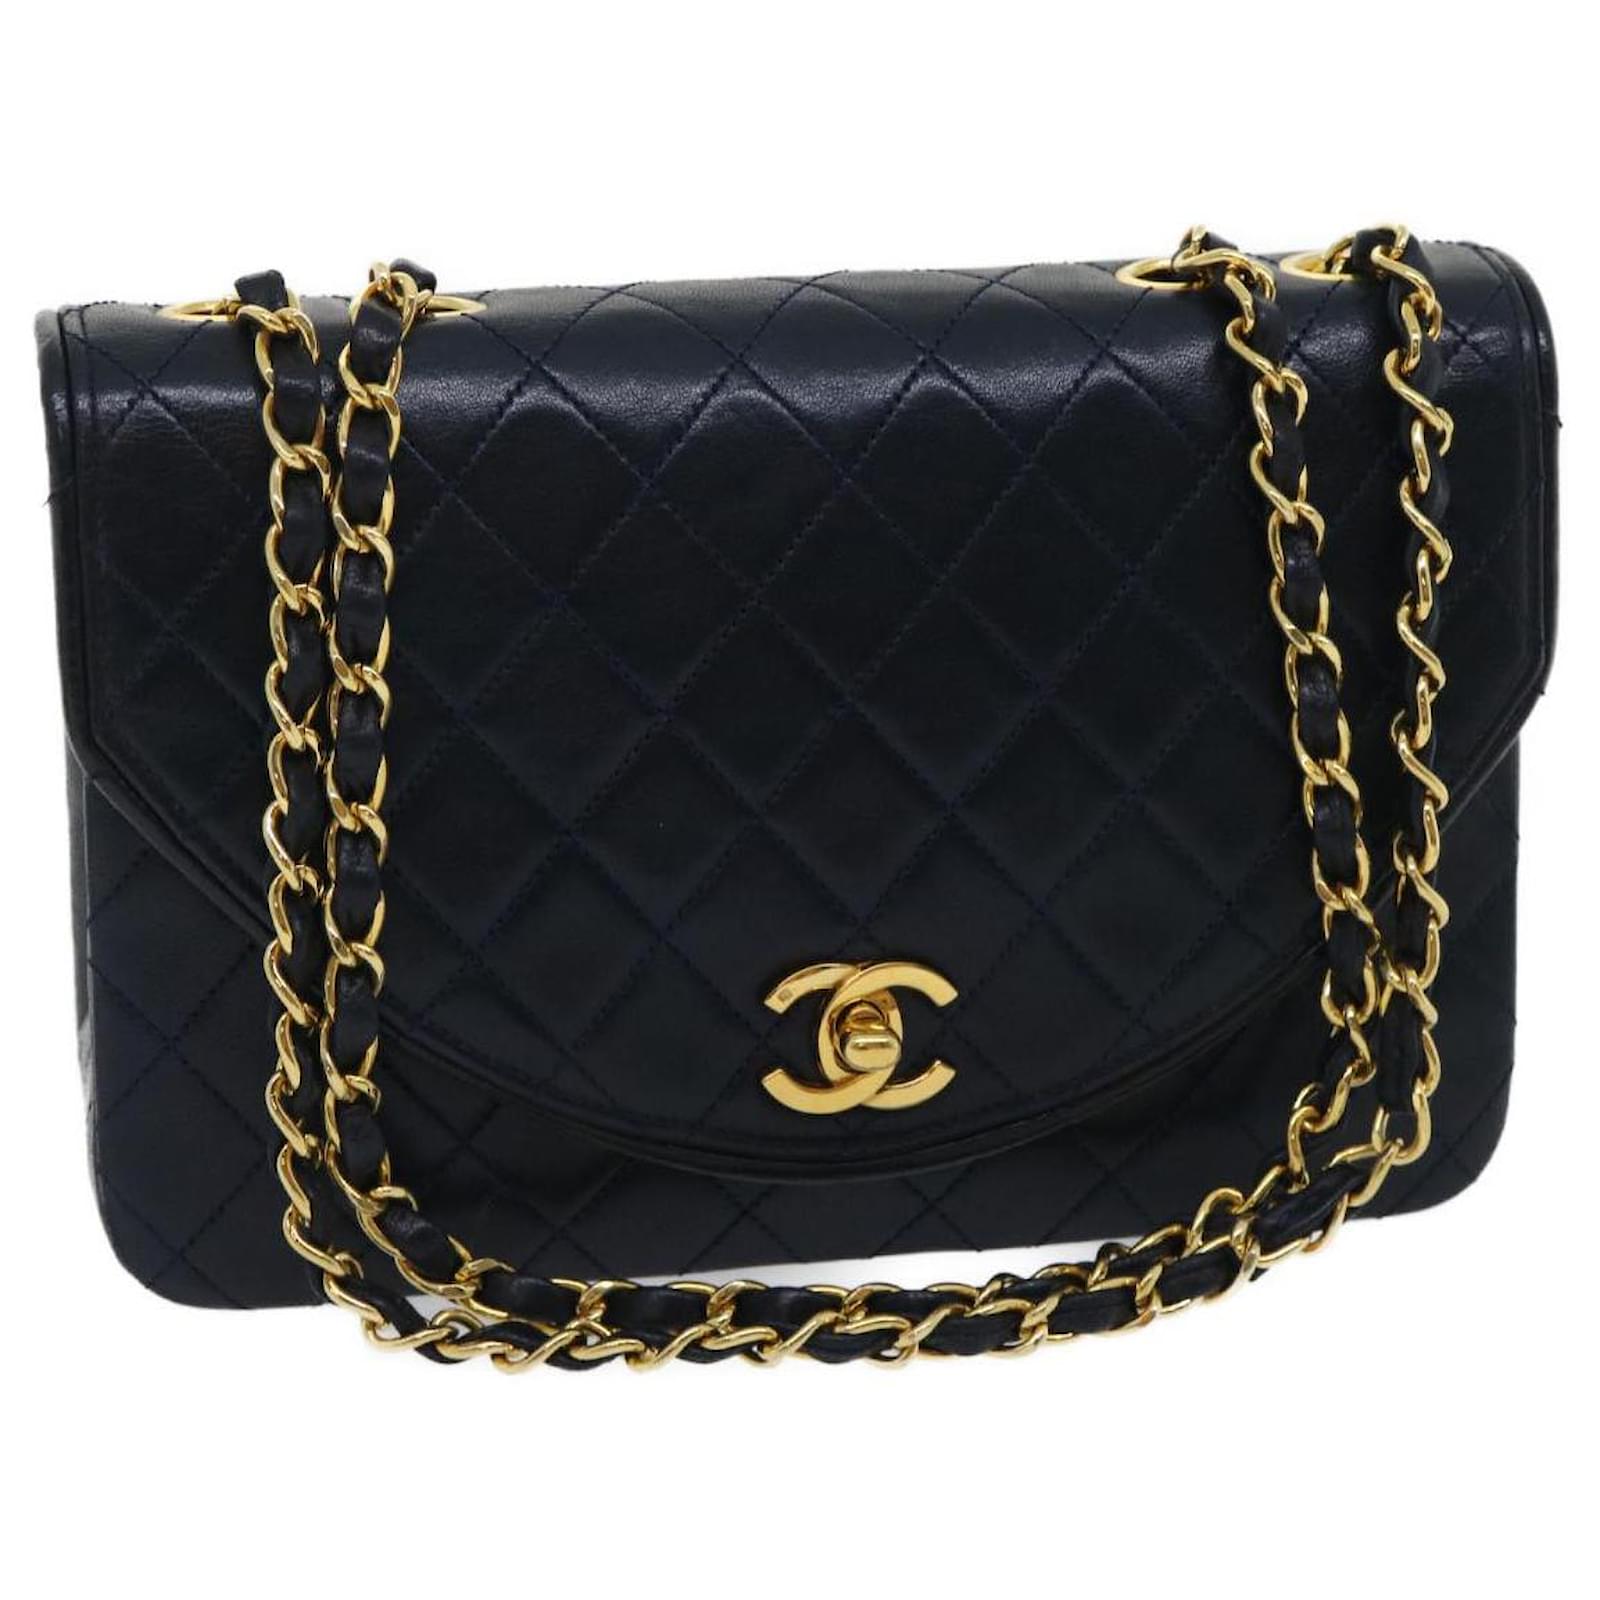 Handbags Chanel Chanel Matelasse Chain Flap Shoulder Bag Lamb Skin Navy Gold CC Auth am2602ga